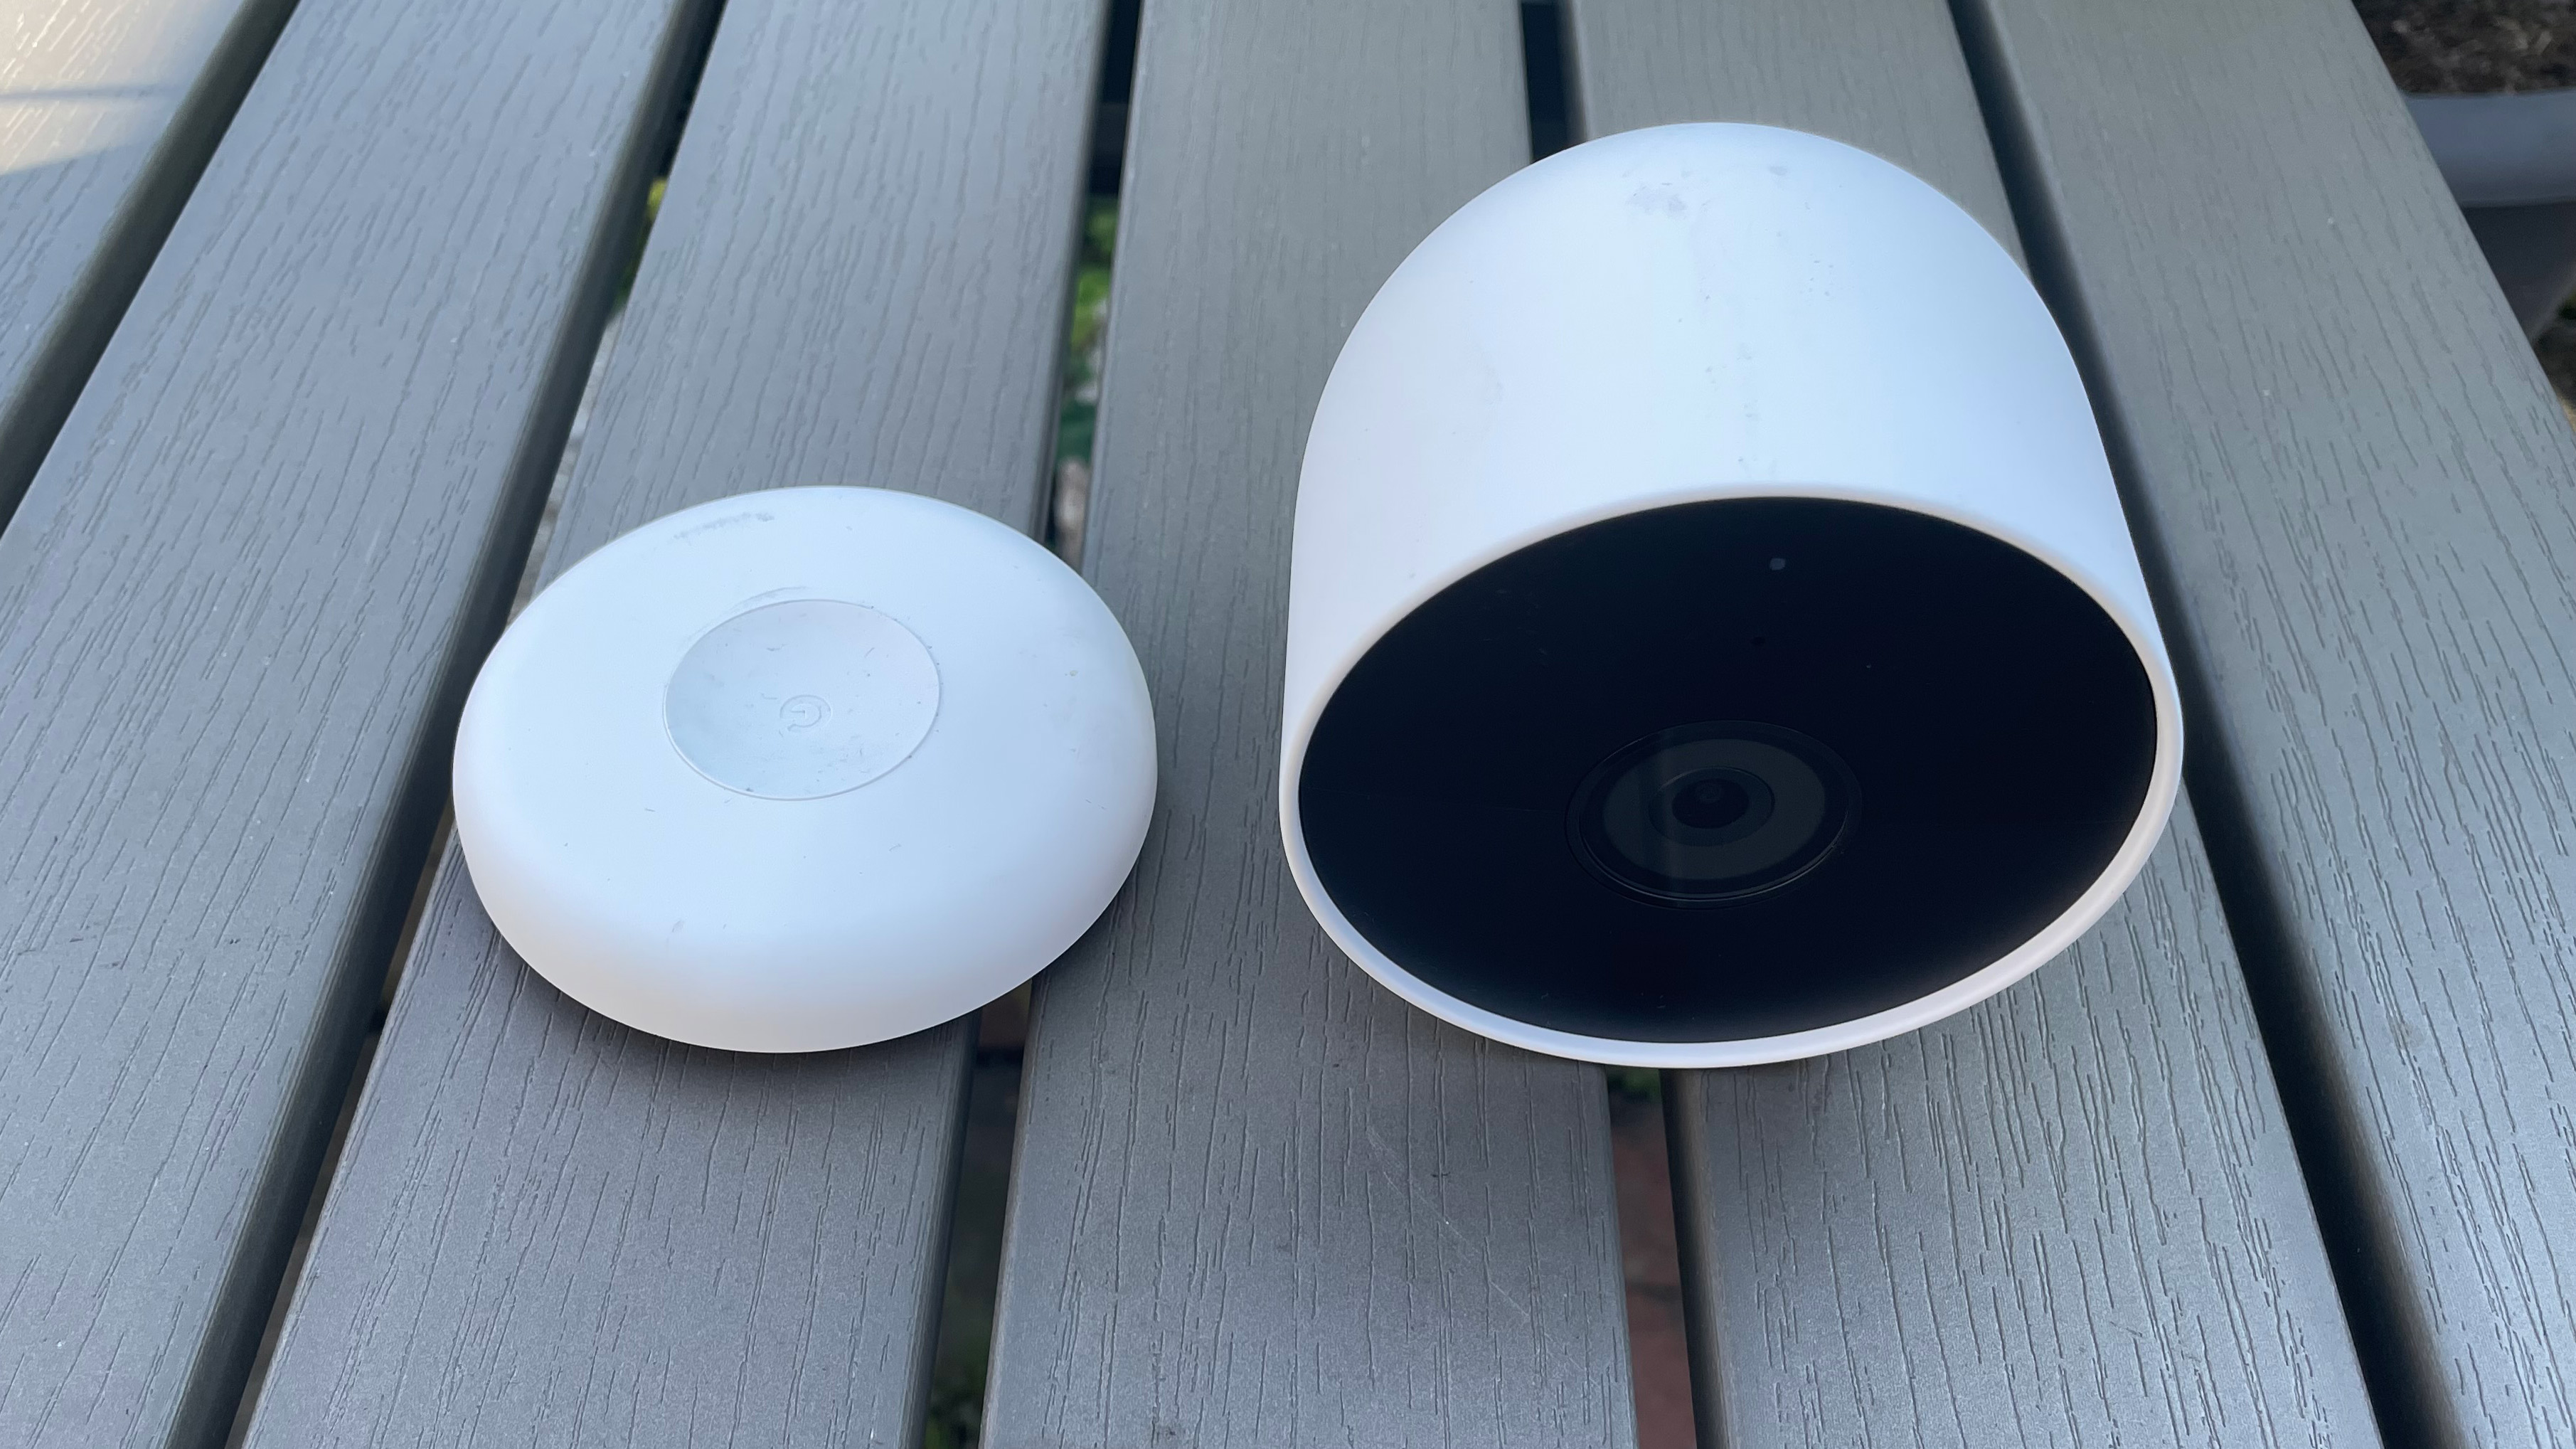 Google Nest Cam (baterai) dan dudukan magnetnya di atas meja